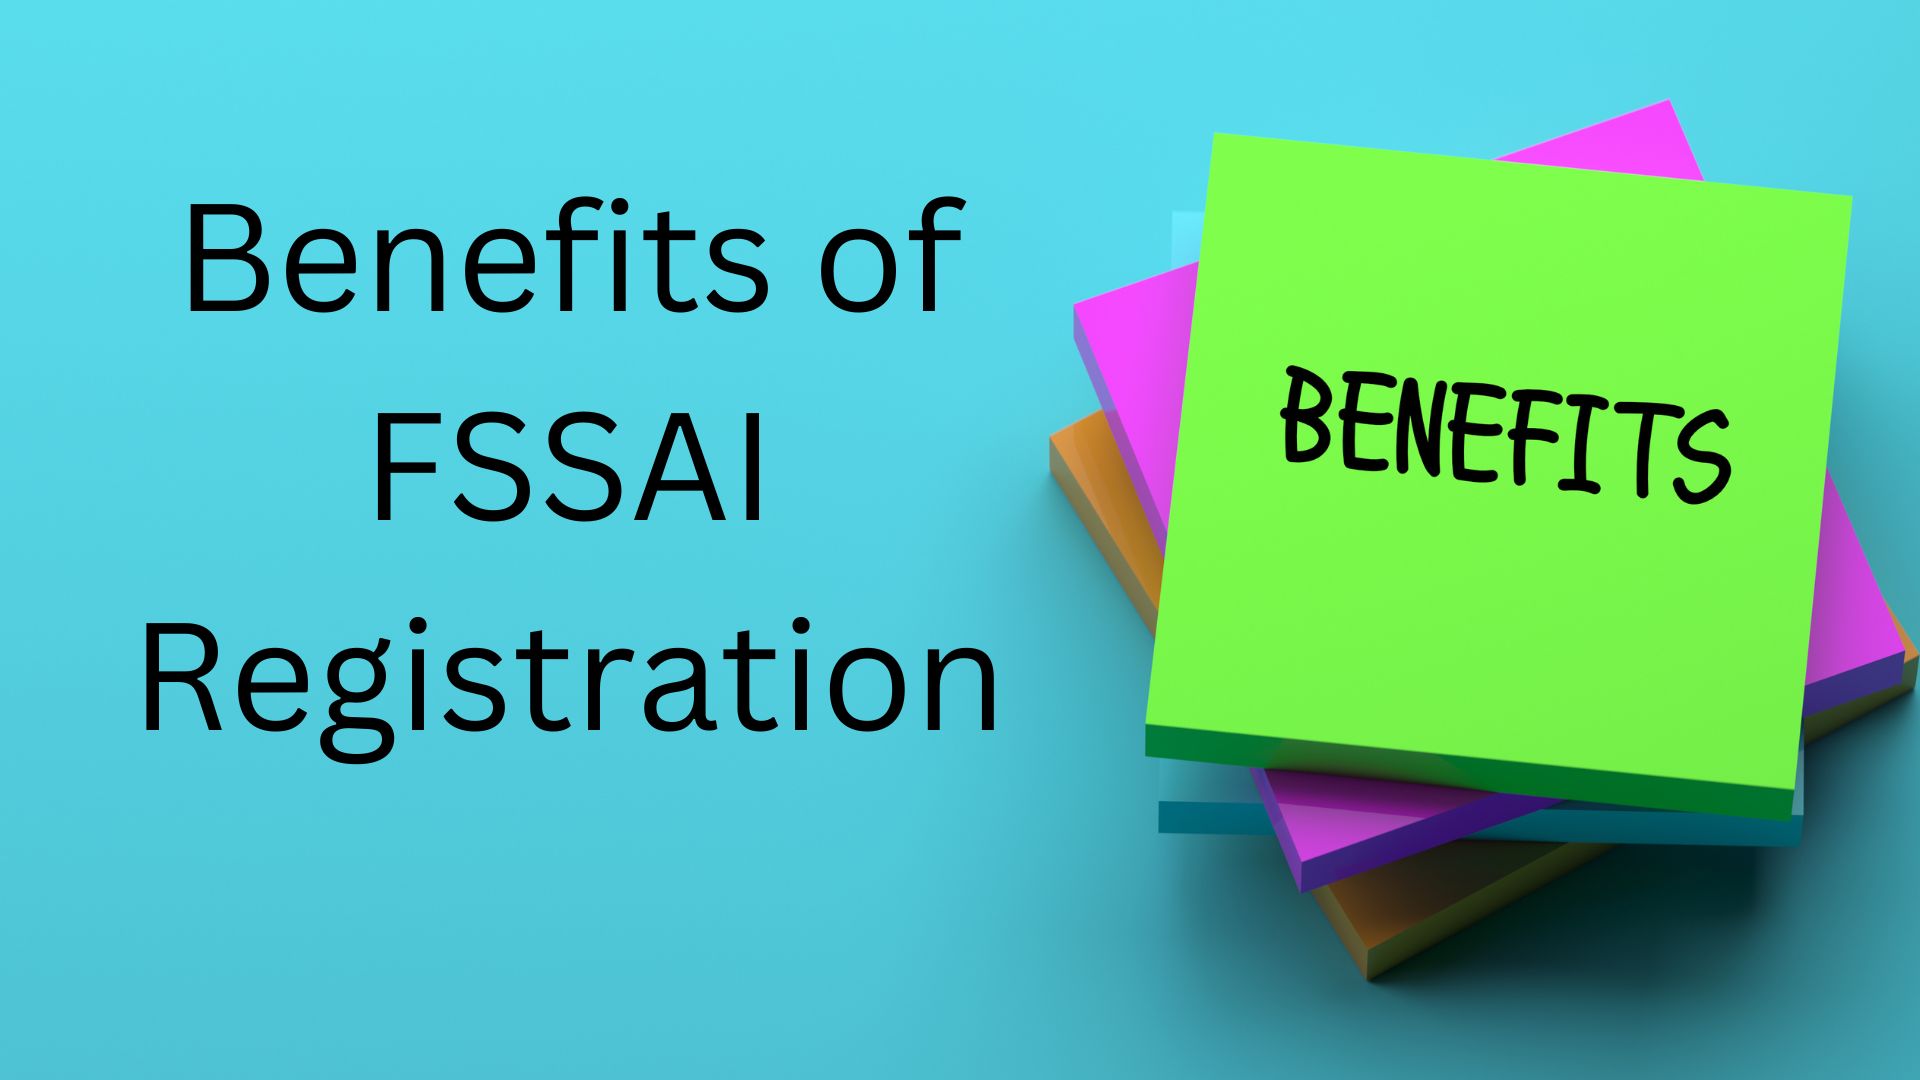 Benefits of FSSAI Registration